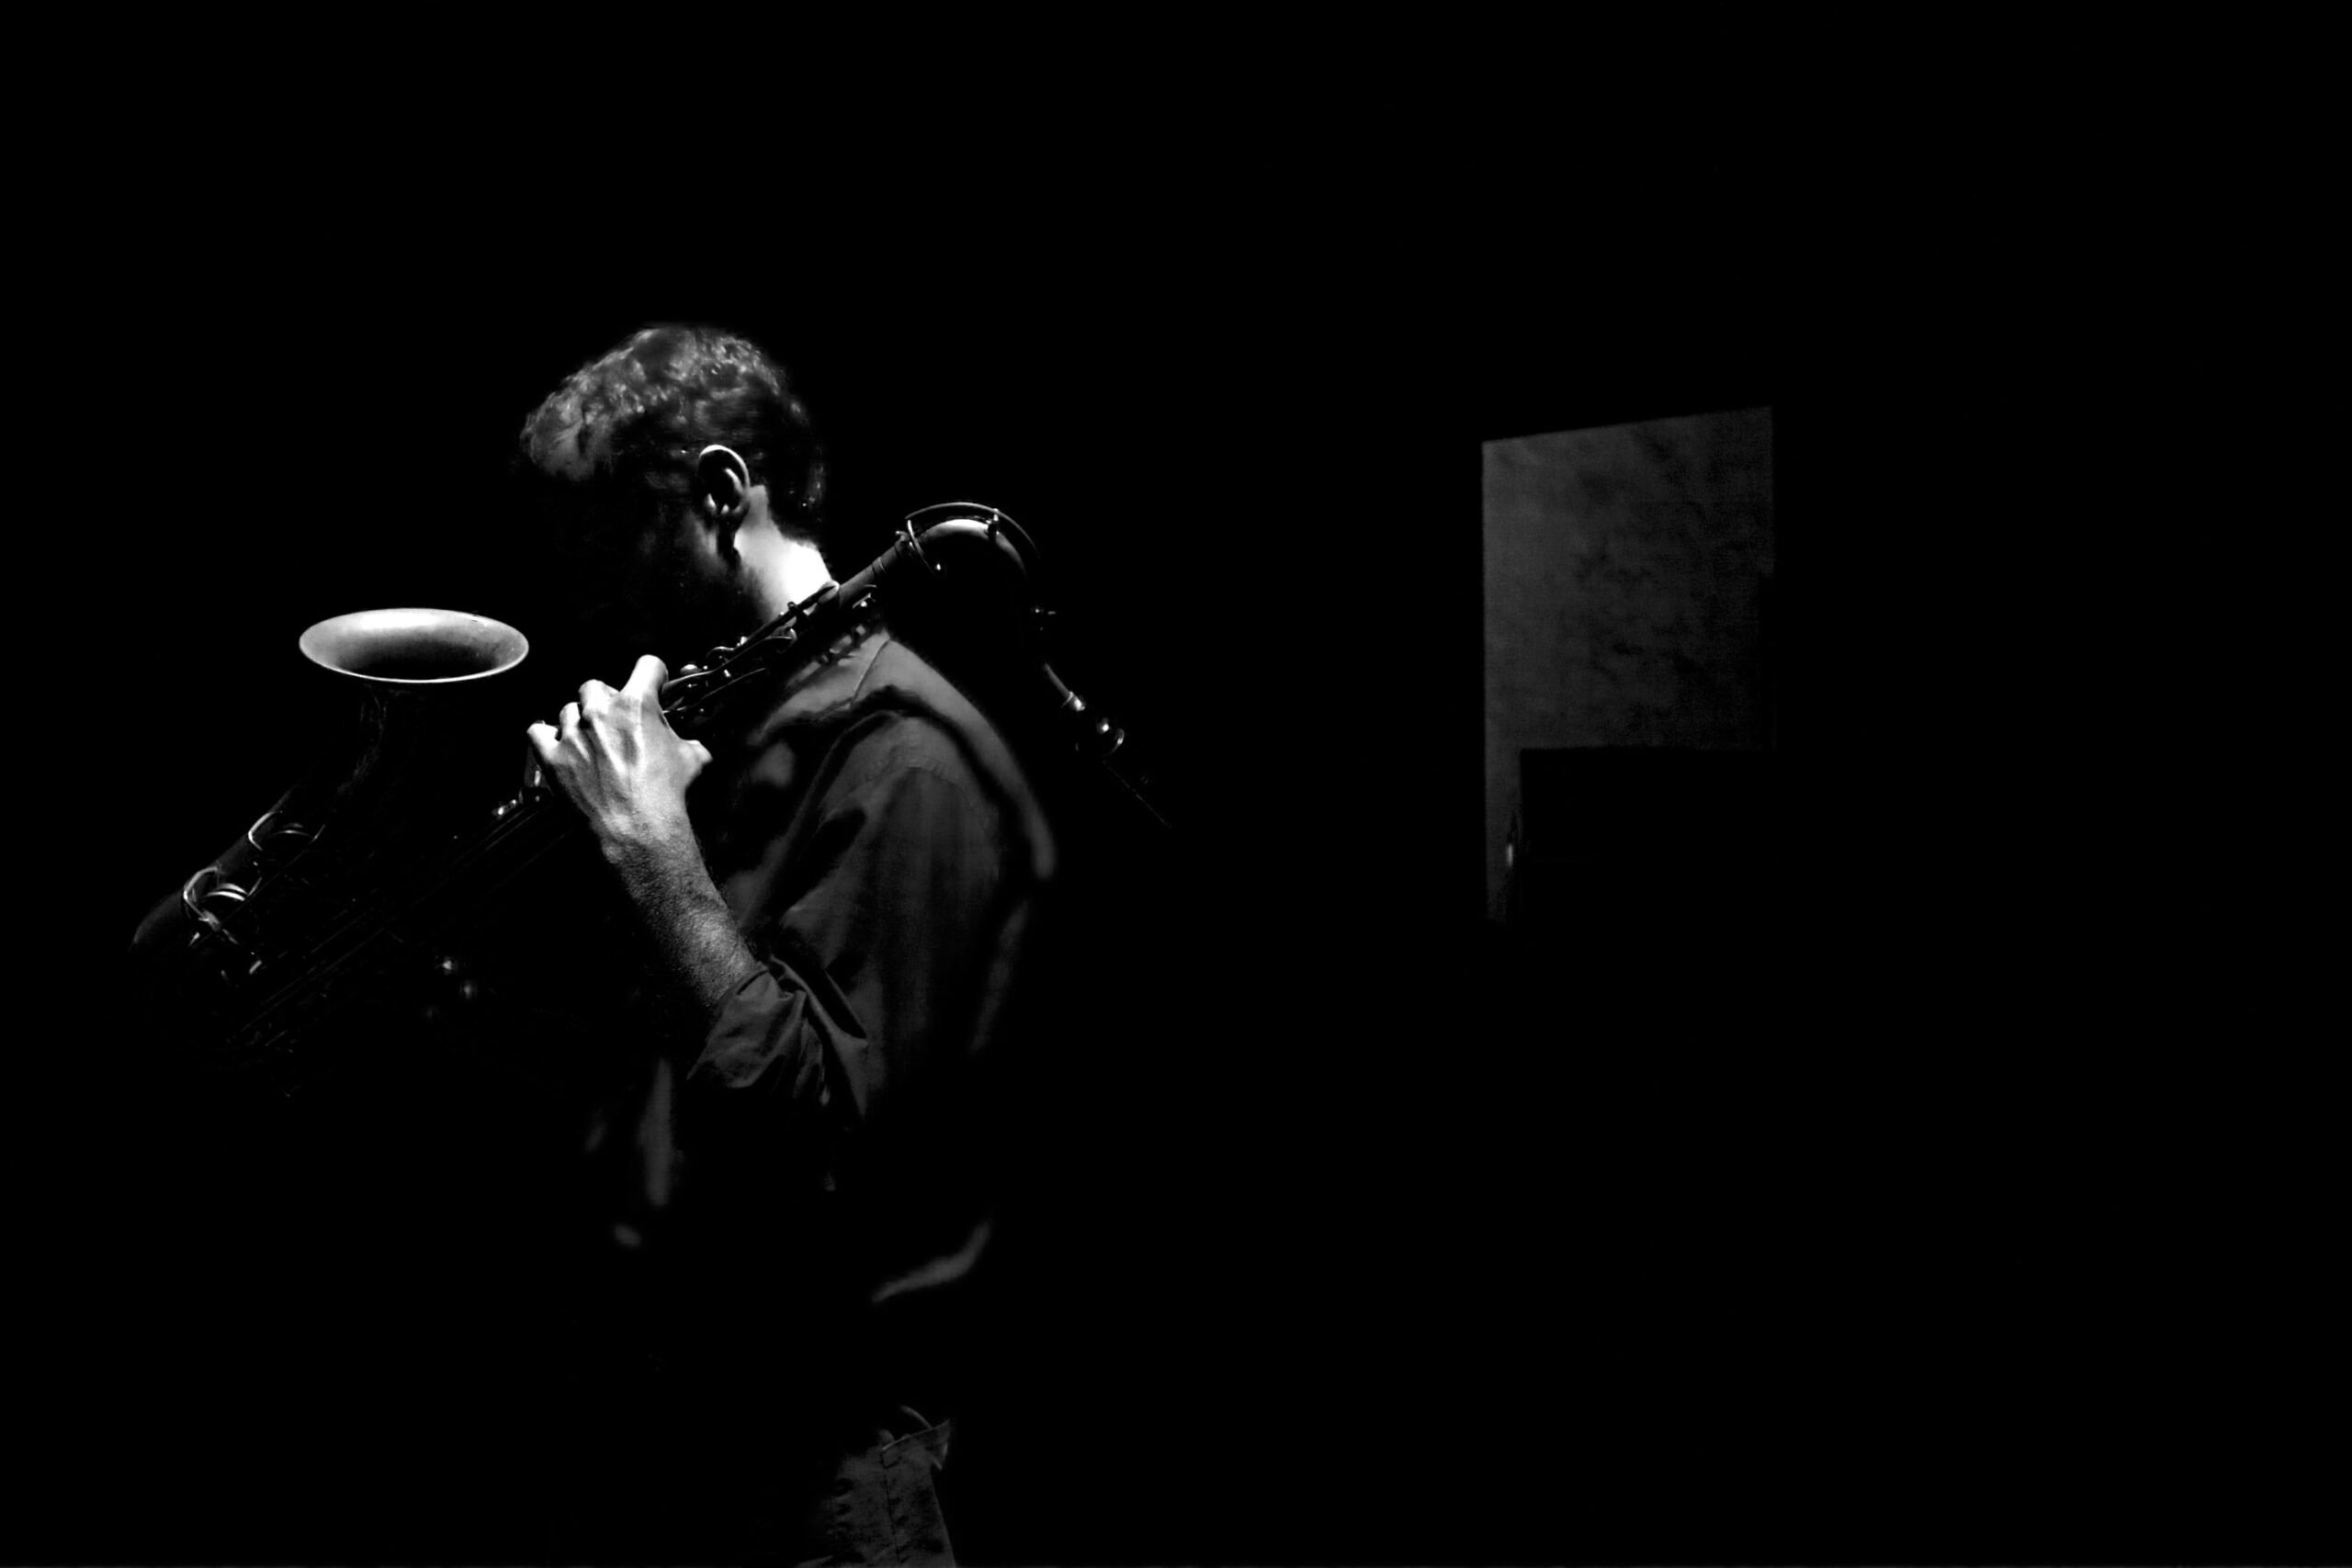 Francesco Bigoni, Umbria Jazz